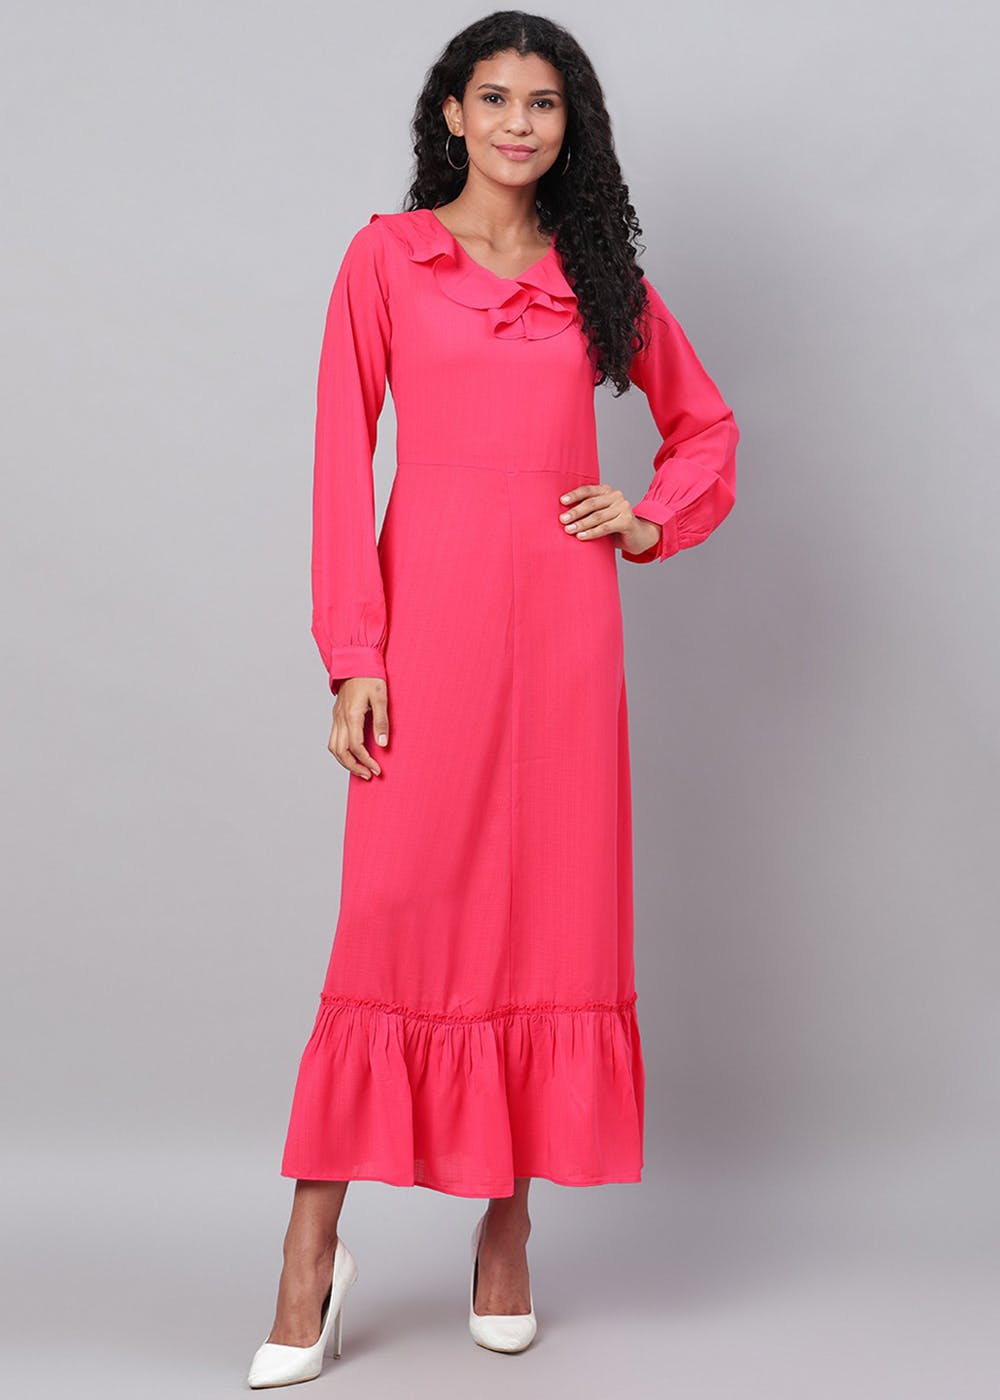 Hot Pink Maxi Dress - Column Maxi Dress - Sleeveless Maxi Dress - Lulus